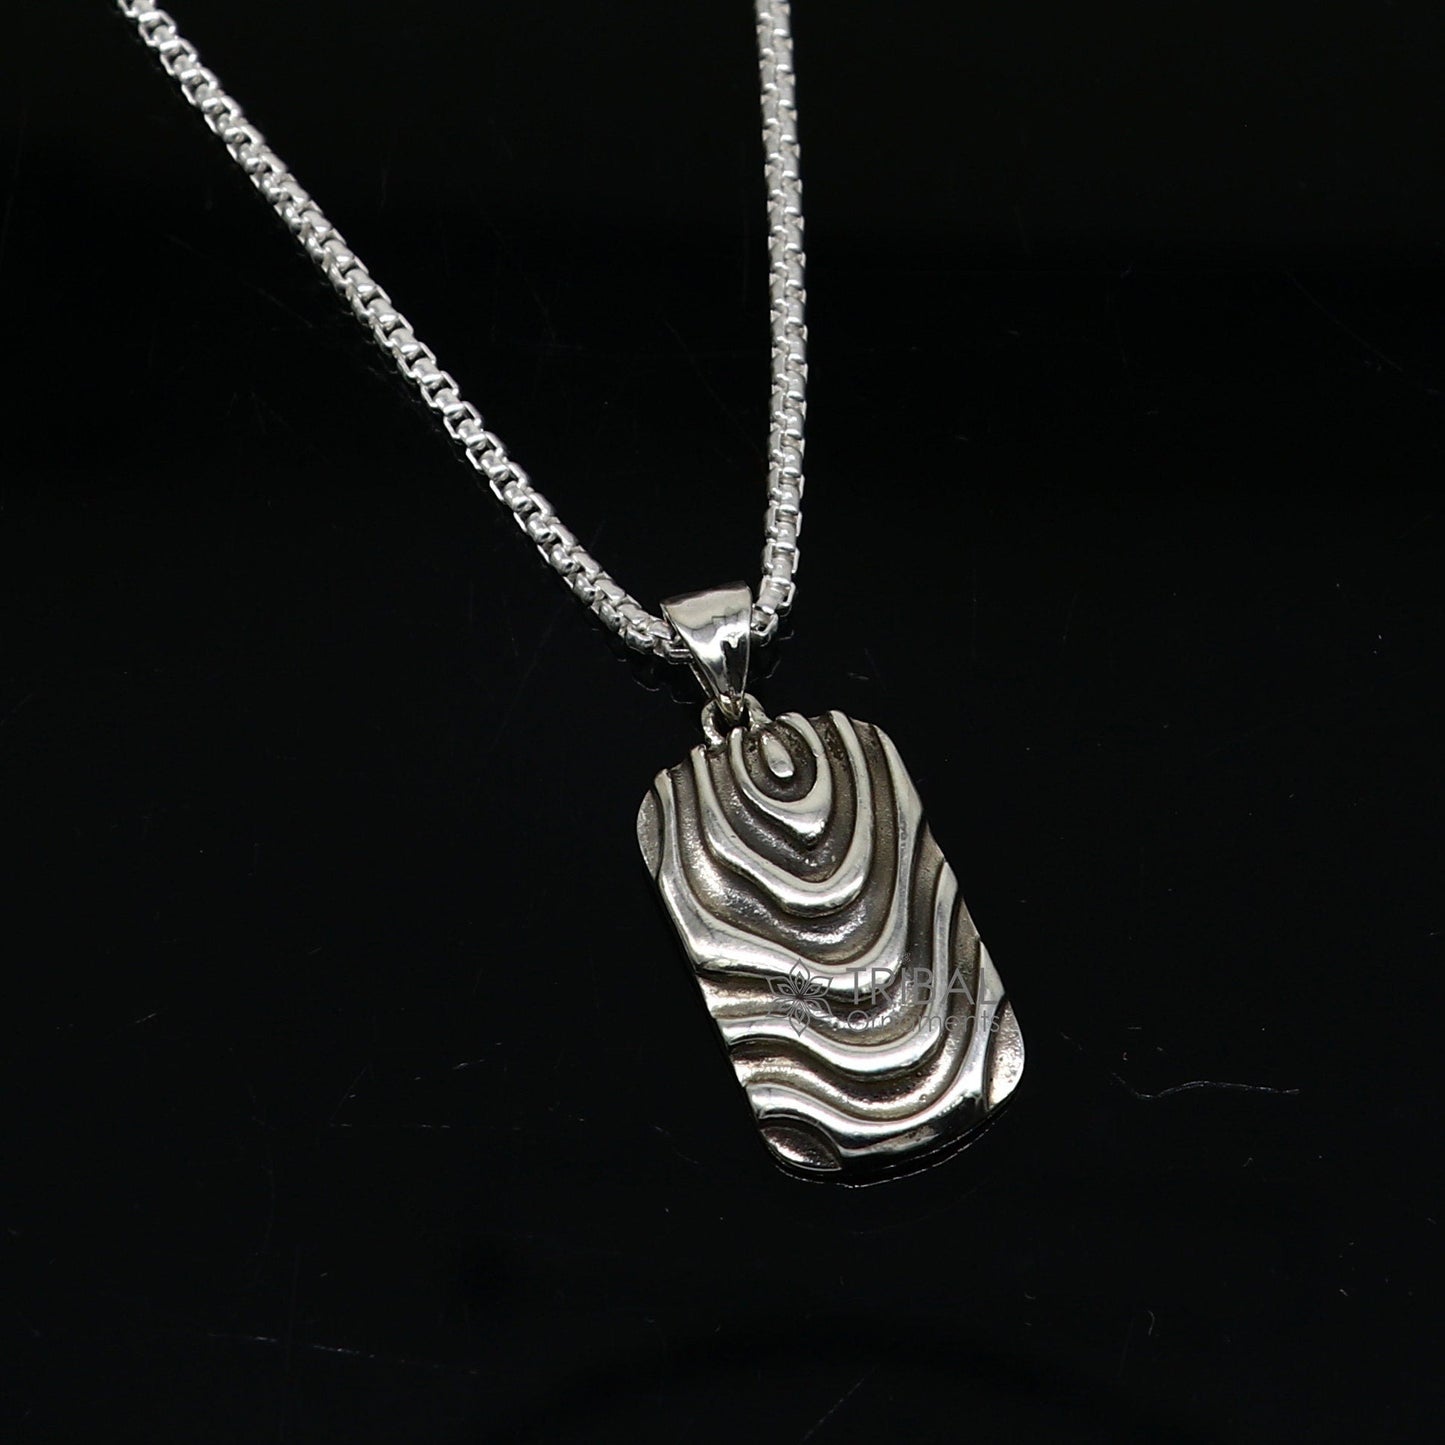 925 sterling silver unique design pendant, silver hop hop trendy pendant necklace, silver jewelry nsp640 - TRIBAL ORNAMENTS